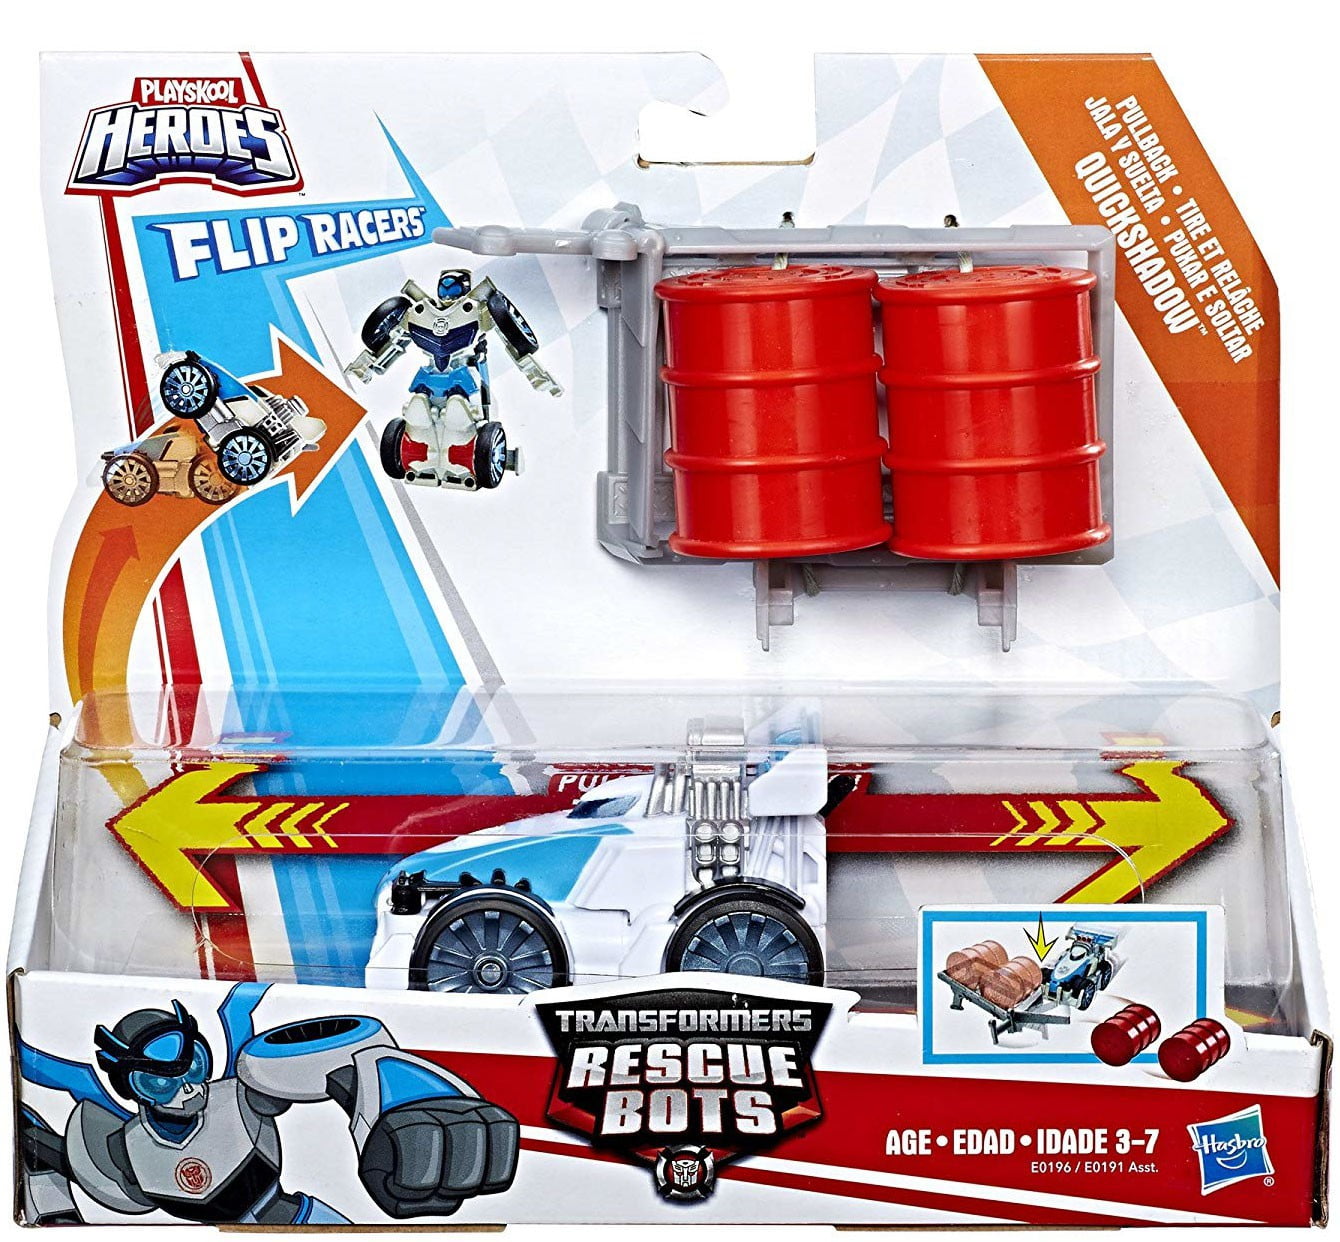 Transformers Rescue Bots Playskool Heroes QUICKSHADOW Action Figure for sale online 